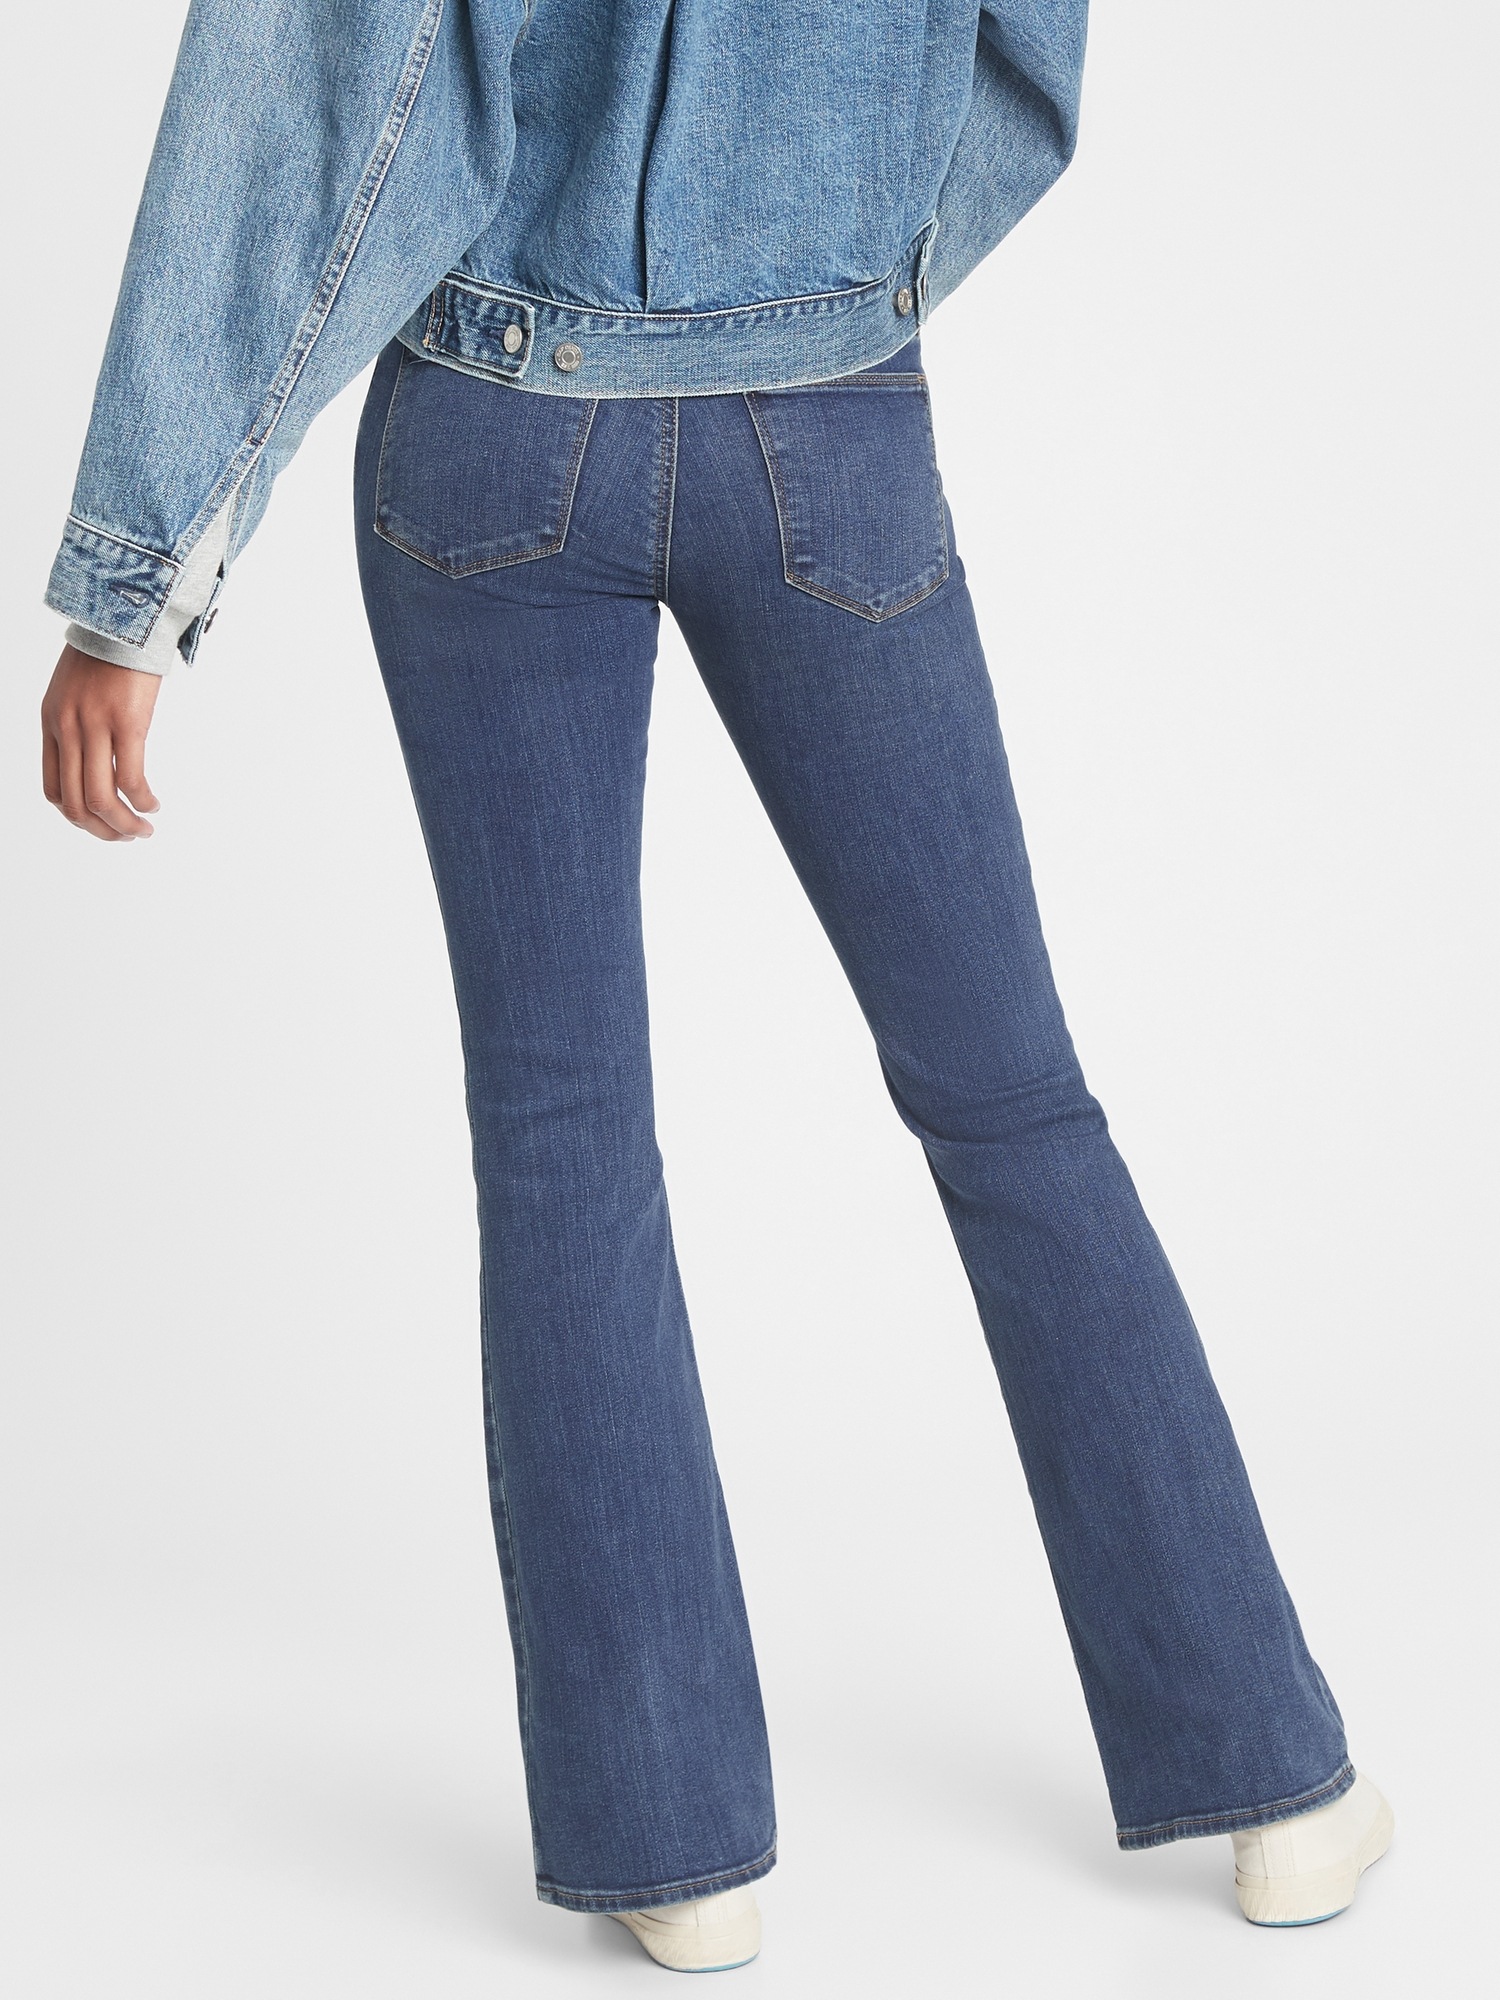 1969 gap jeans boot cut